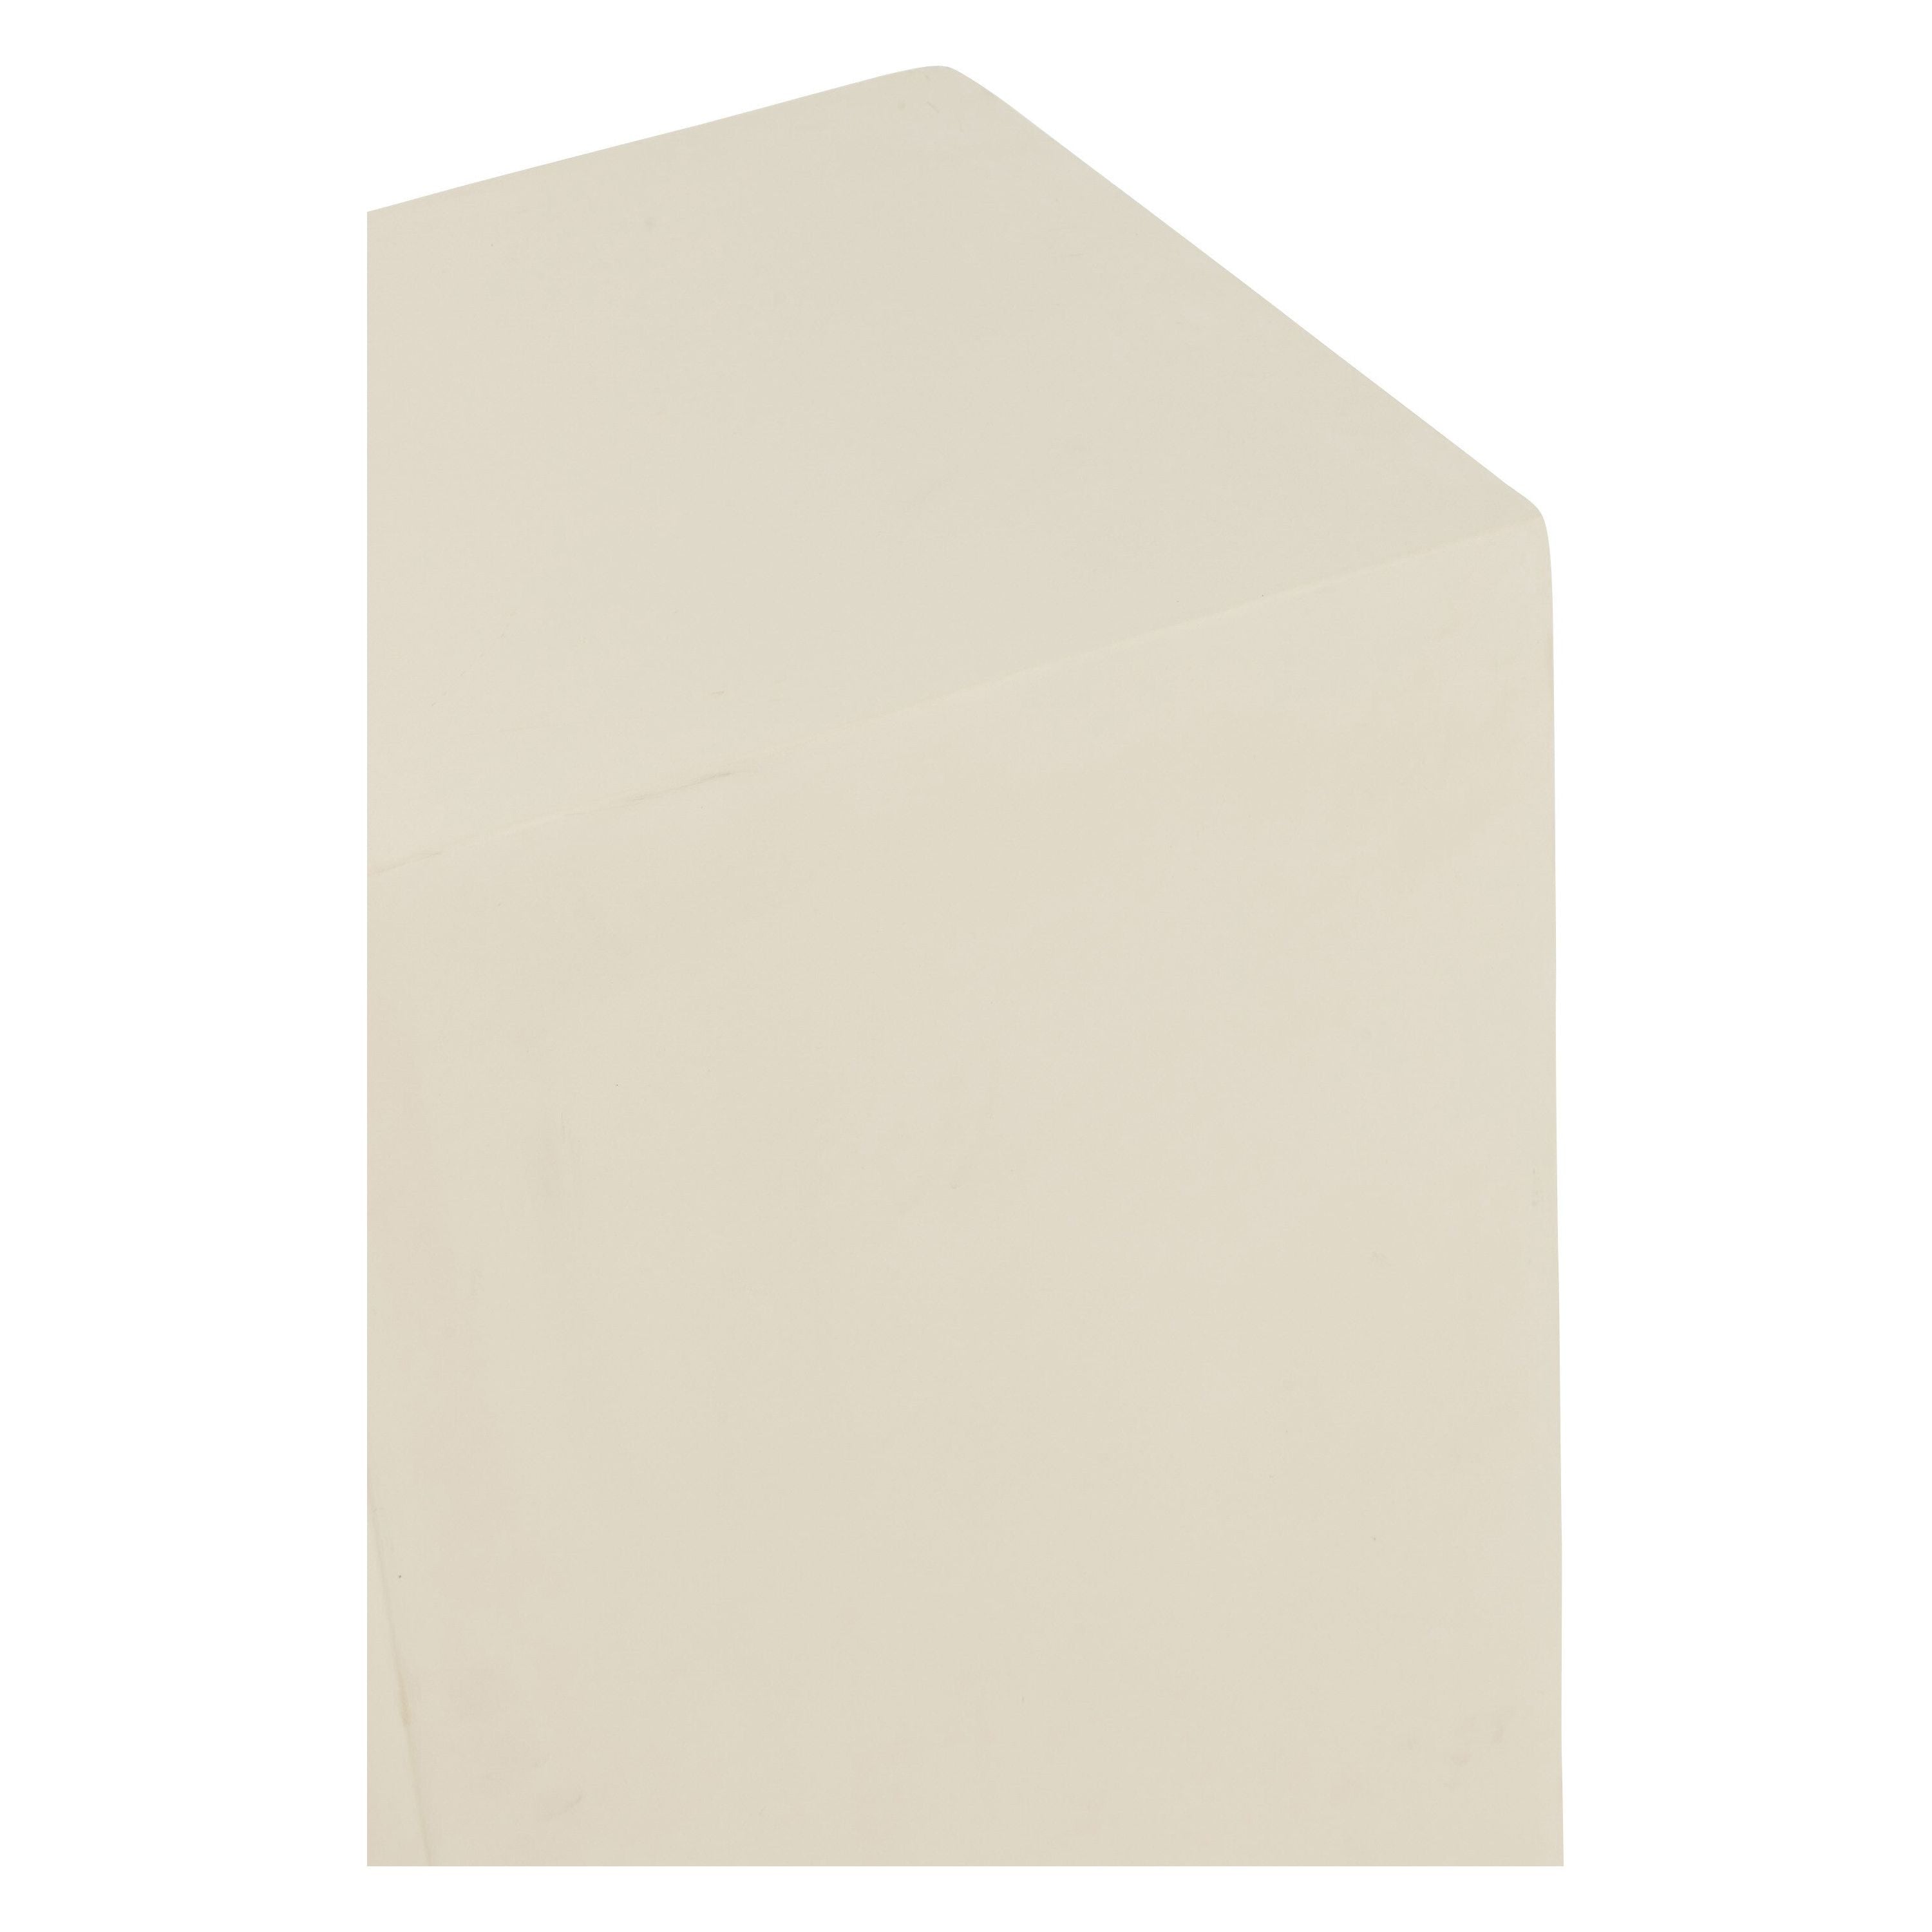 Display Standard Rectangle Plywood White Large